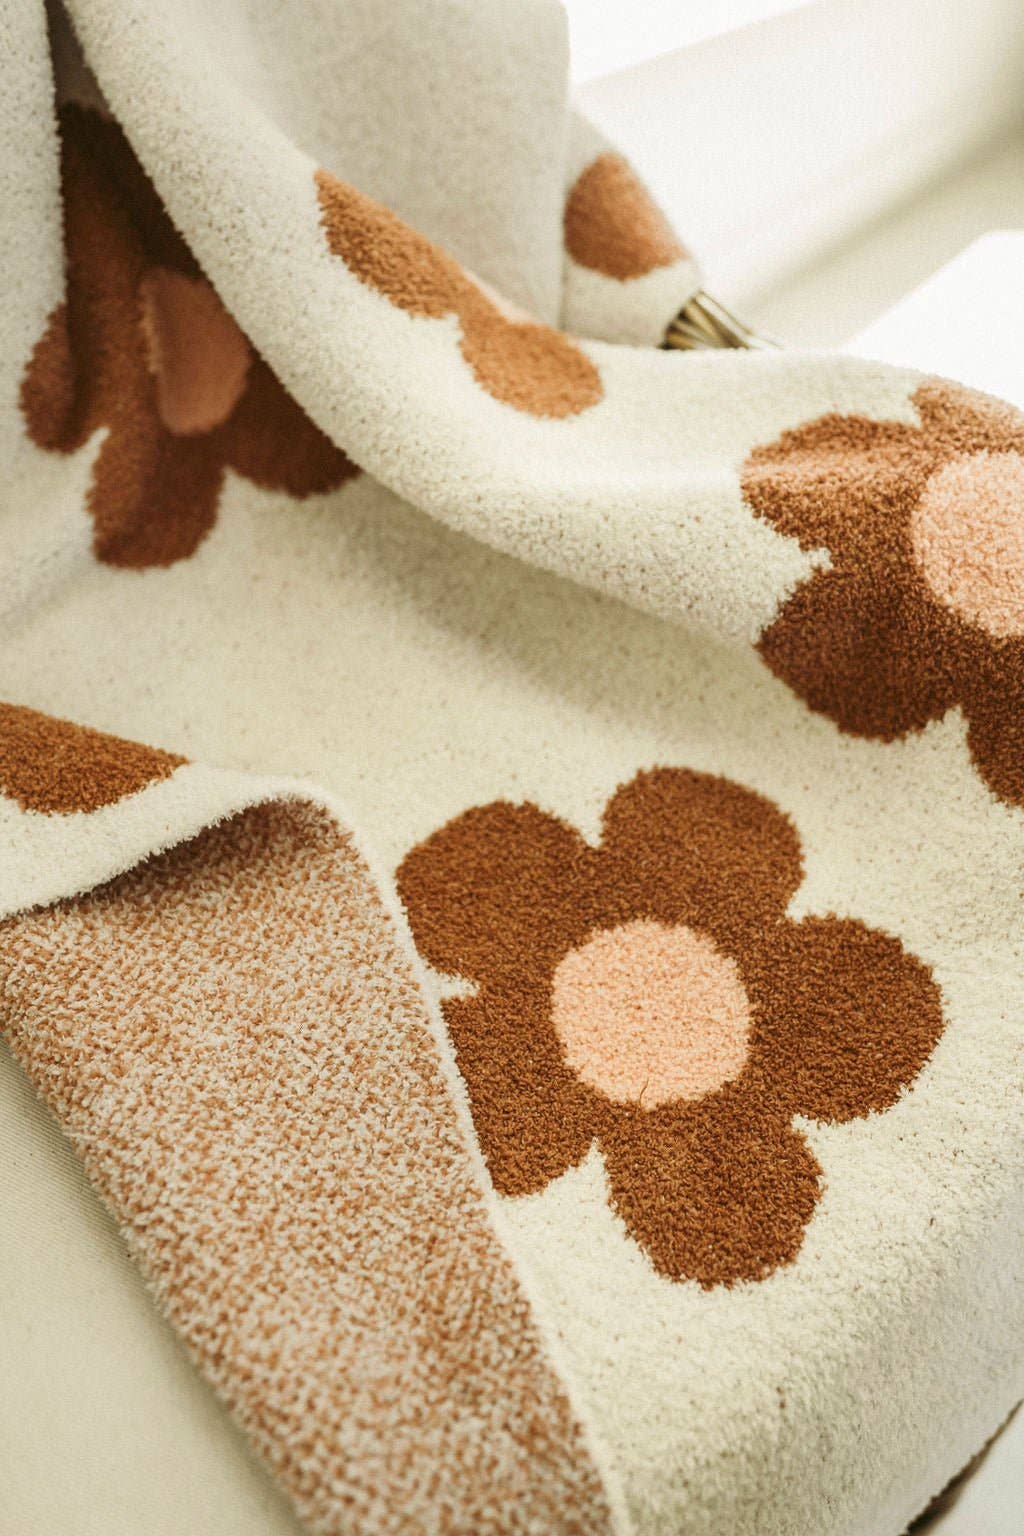 Daisy Plush Blanket - Caramel & Pink: Large 58" x 68"